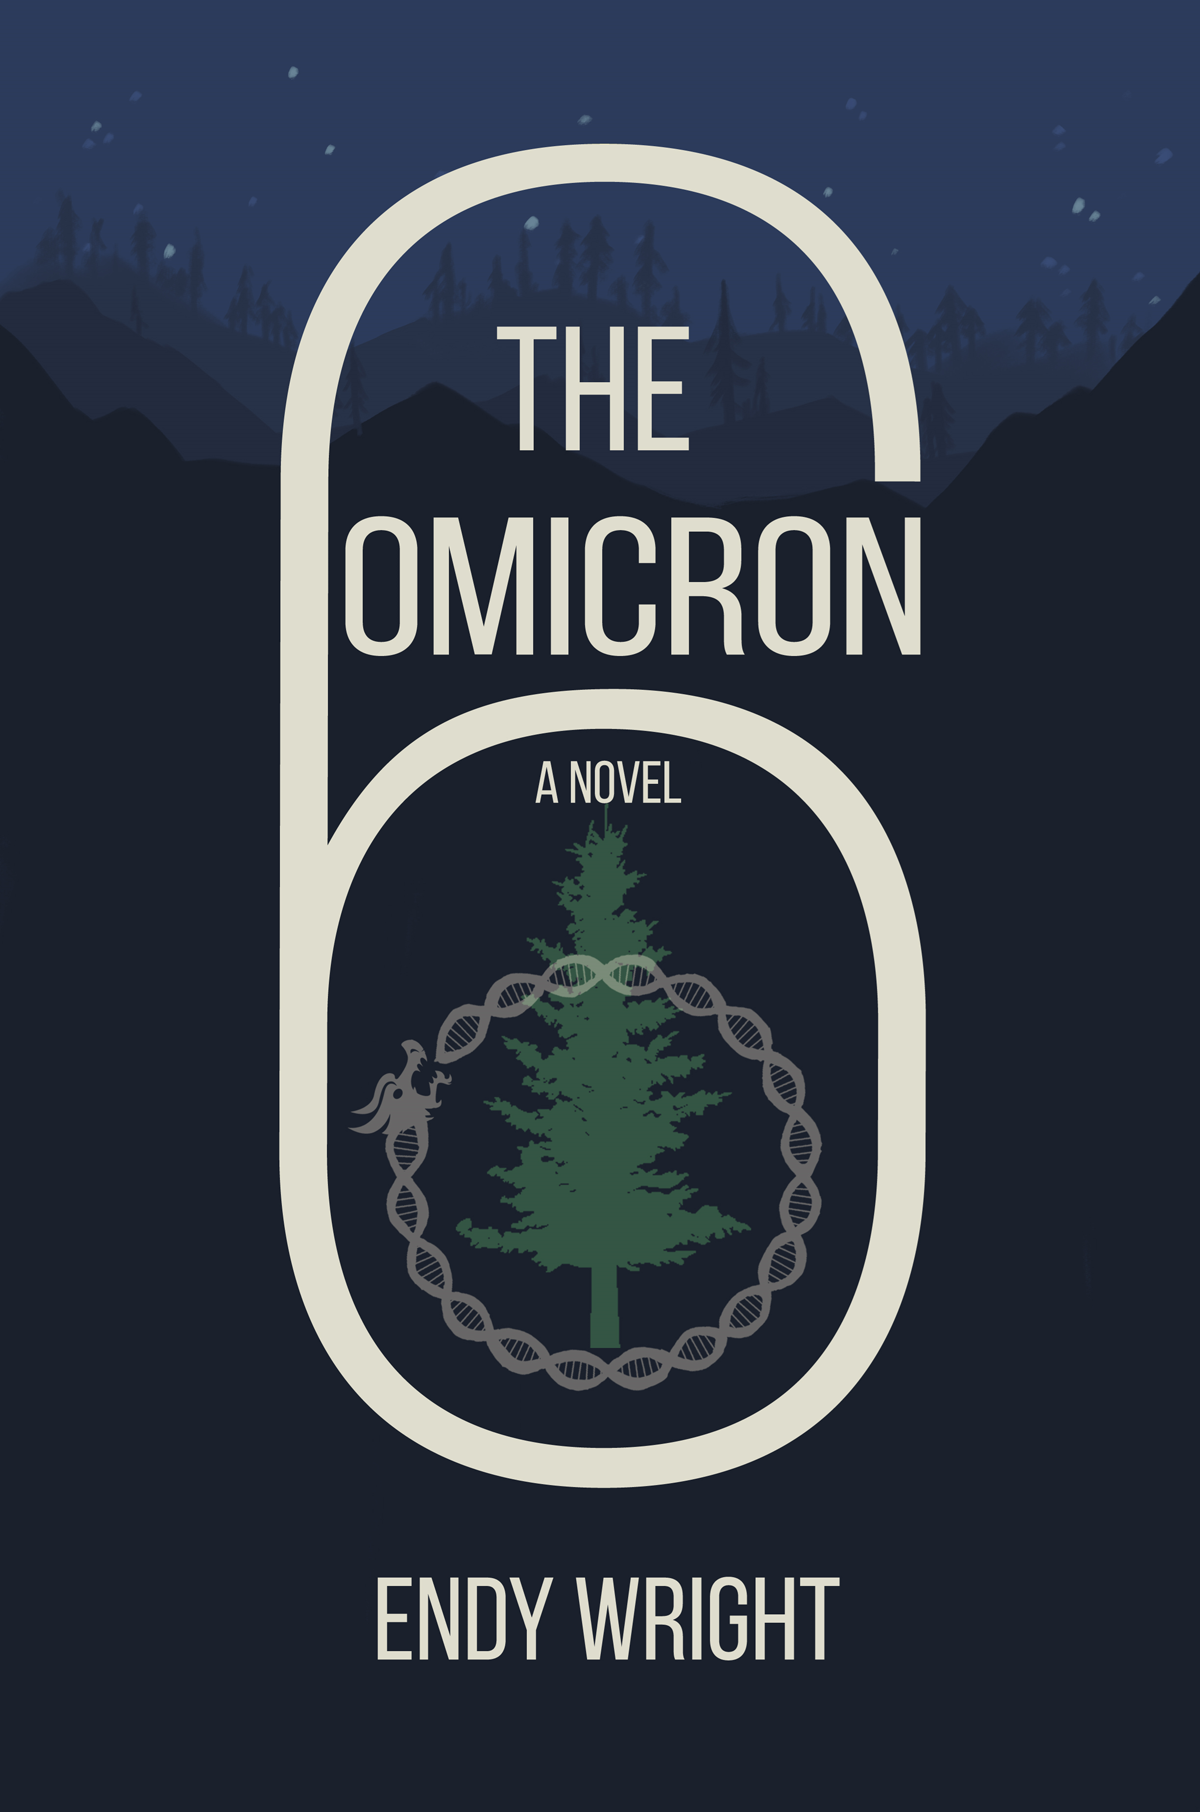 The Omicron Six